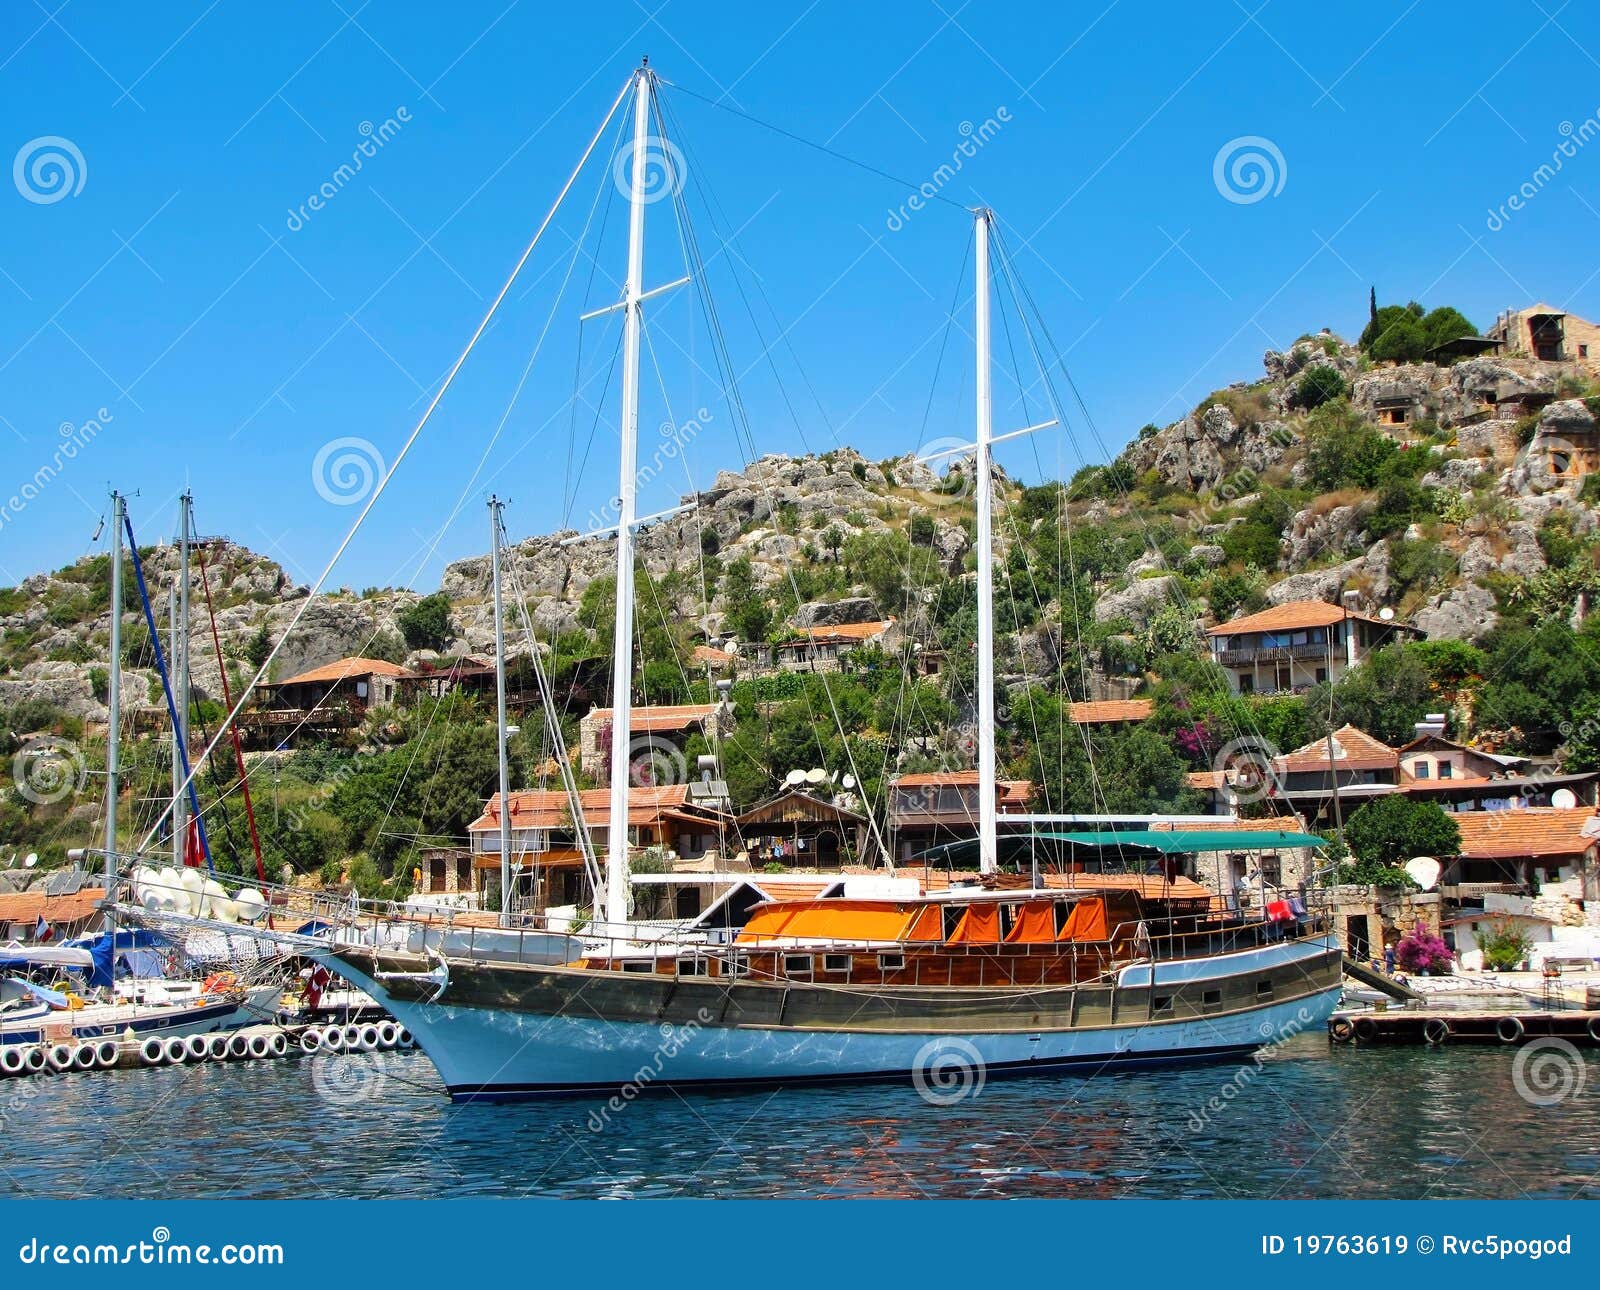 the yacht anchored in kekova